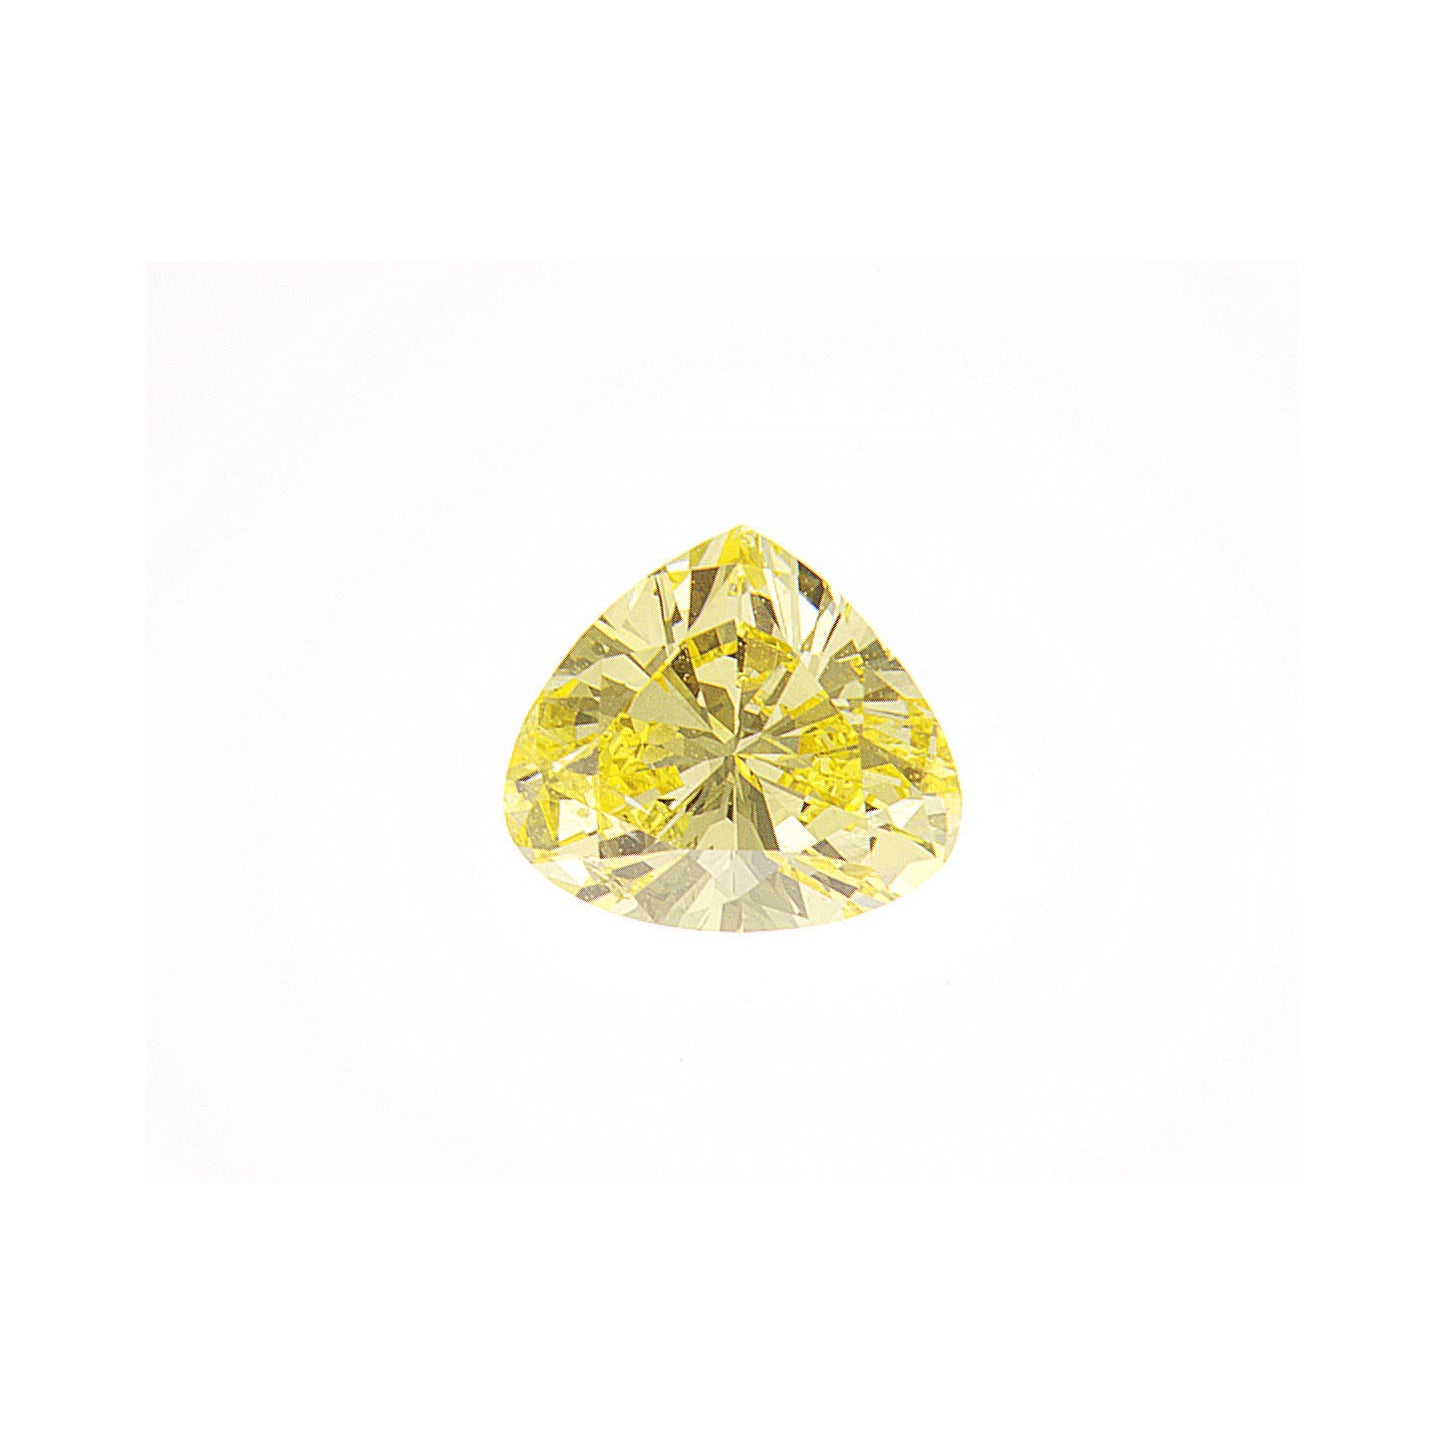 0.50ct Fancy Vivid Yellow, Heart Shape Diamond, SI2 - 5.07 x 5.70 x 2.88mm